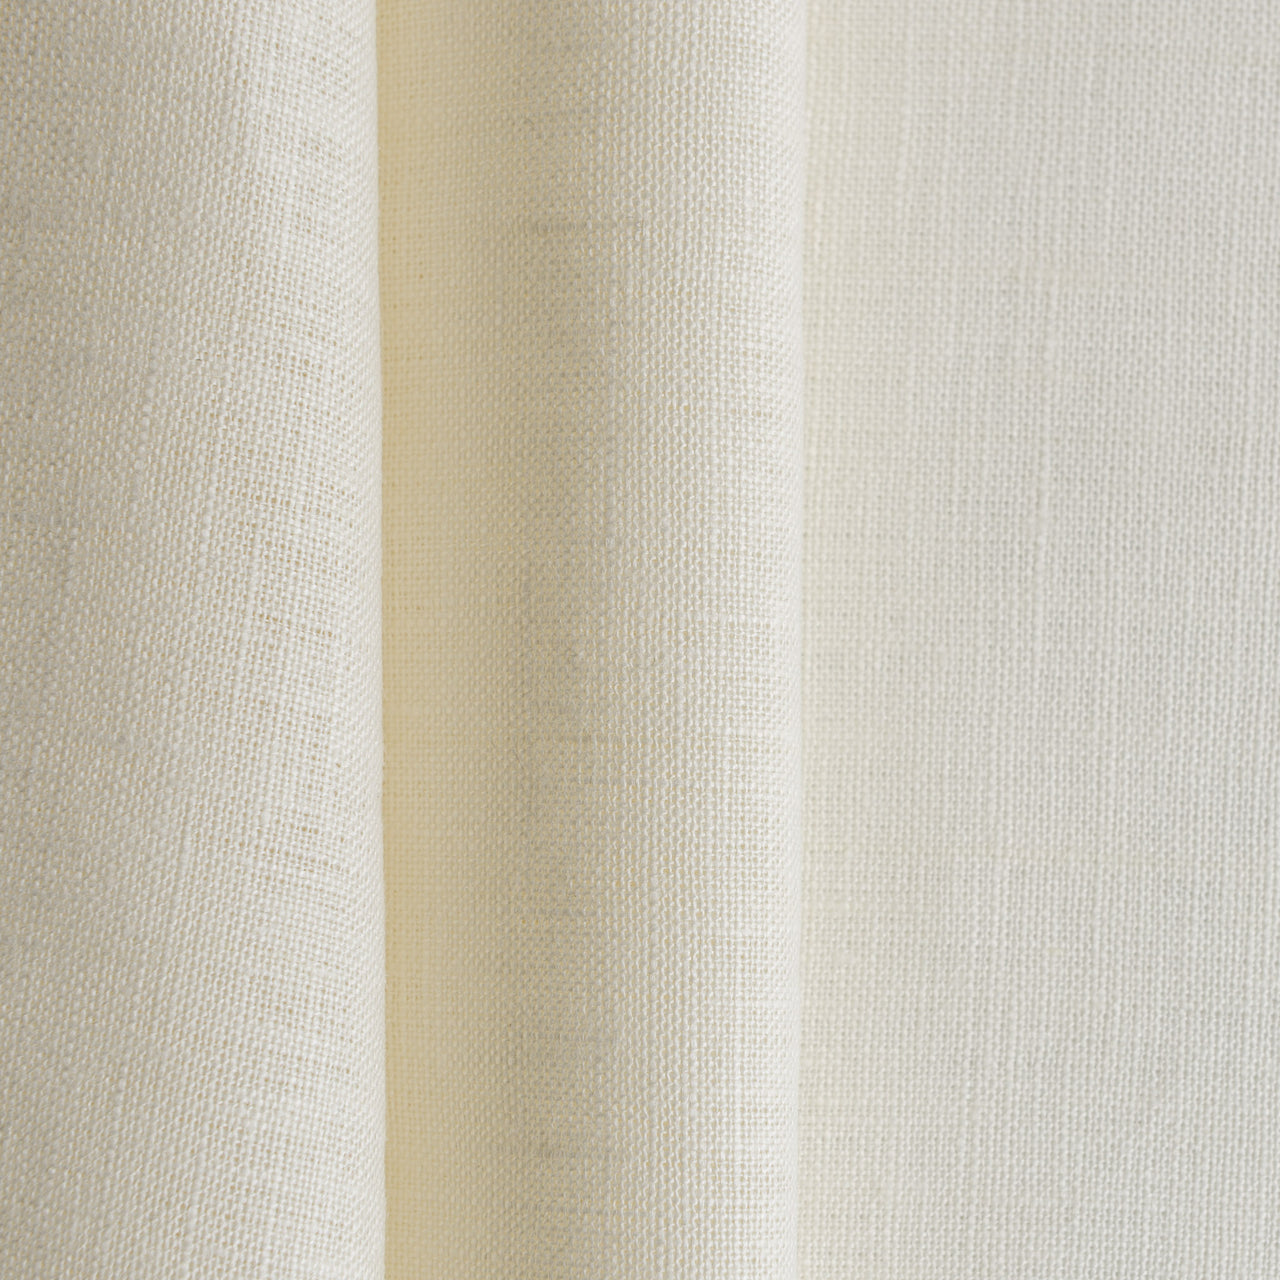 Cream Linen Back Tab Curtain Panel with Blackout Lining - Custom Width, Custom Length, Colour: Cream